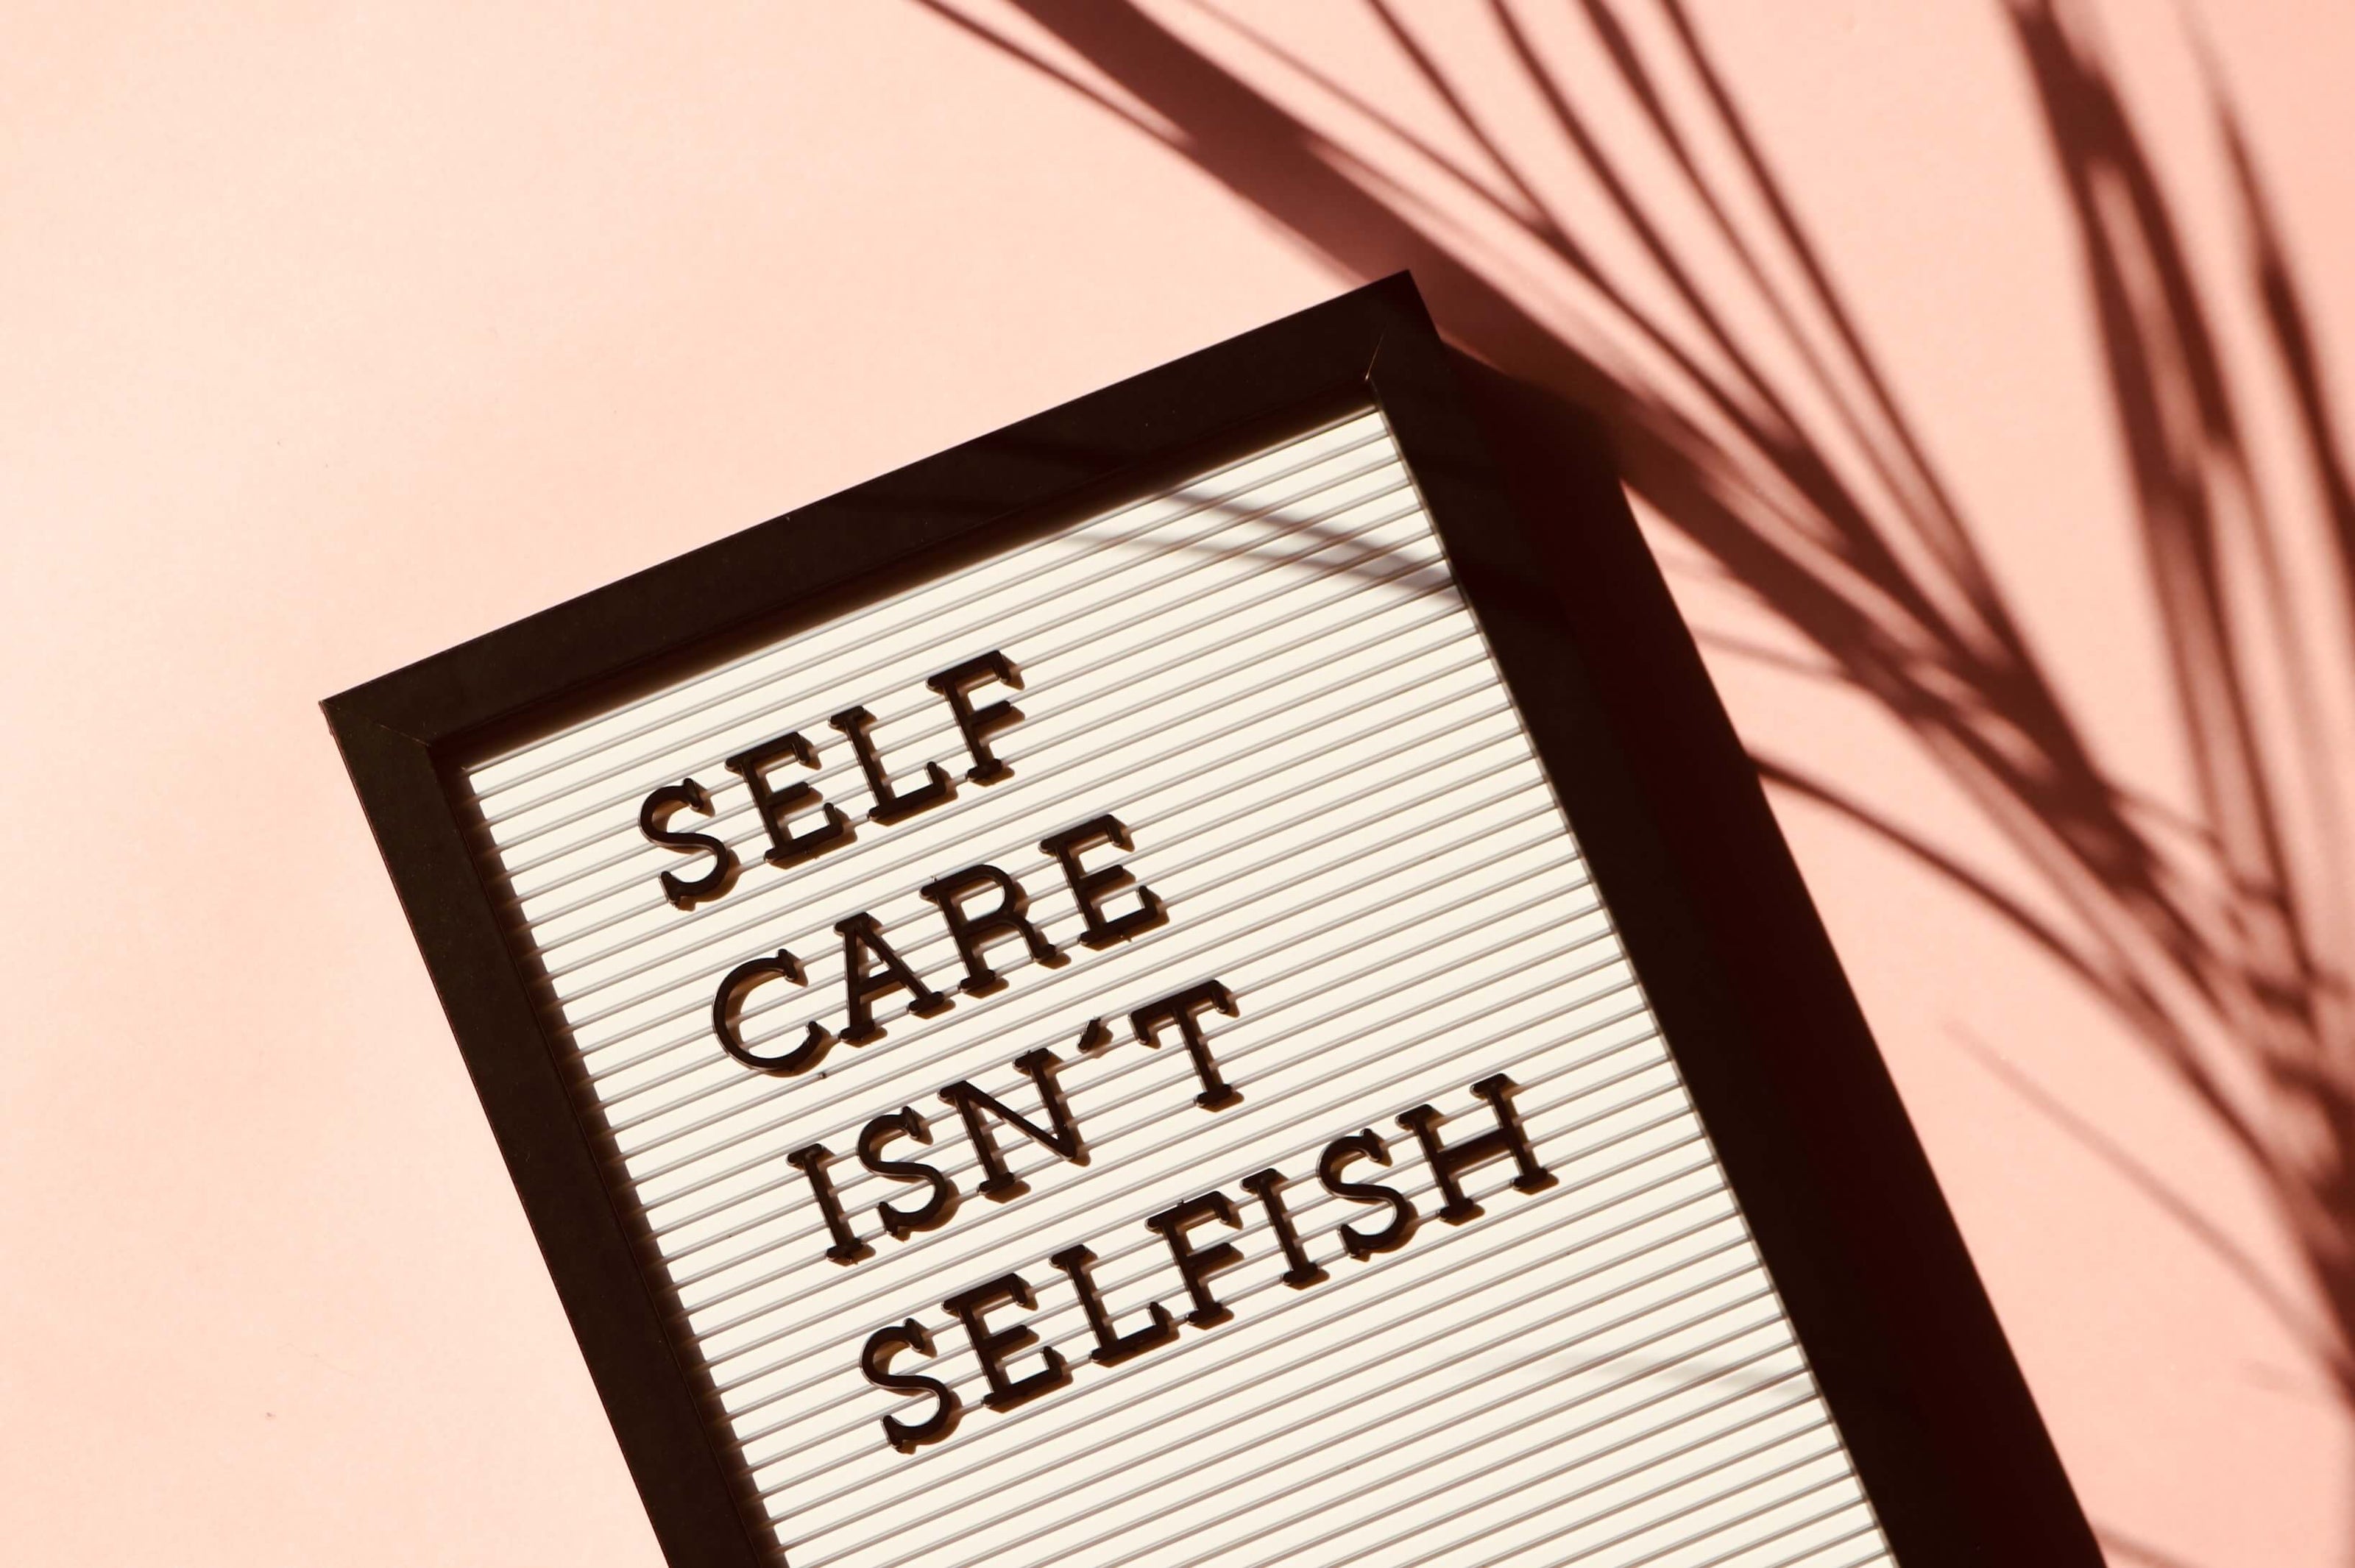 pamper-me-now-self-care-isn't-selfish